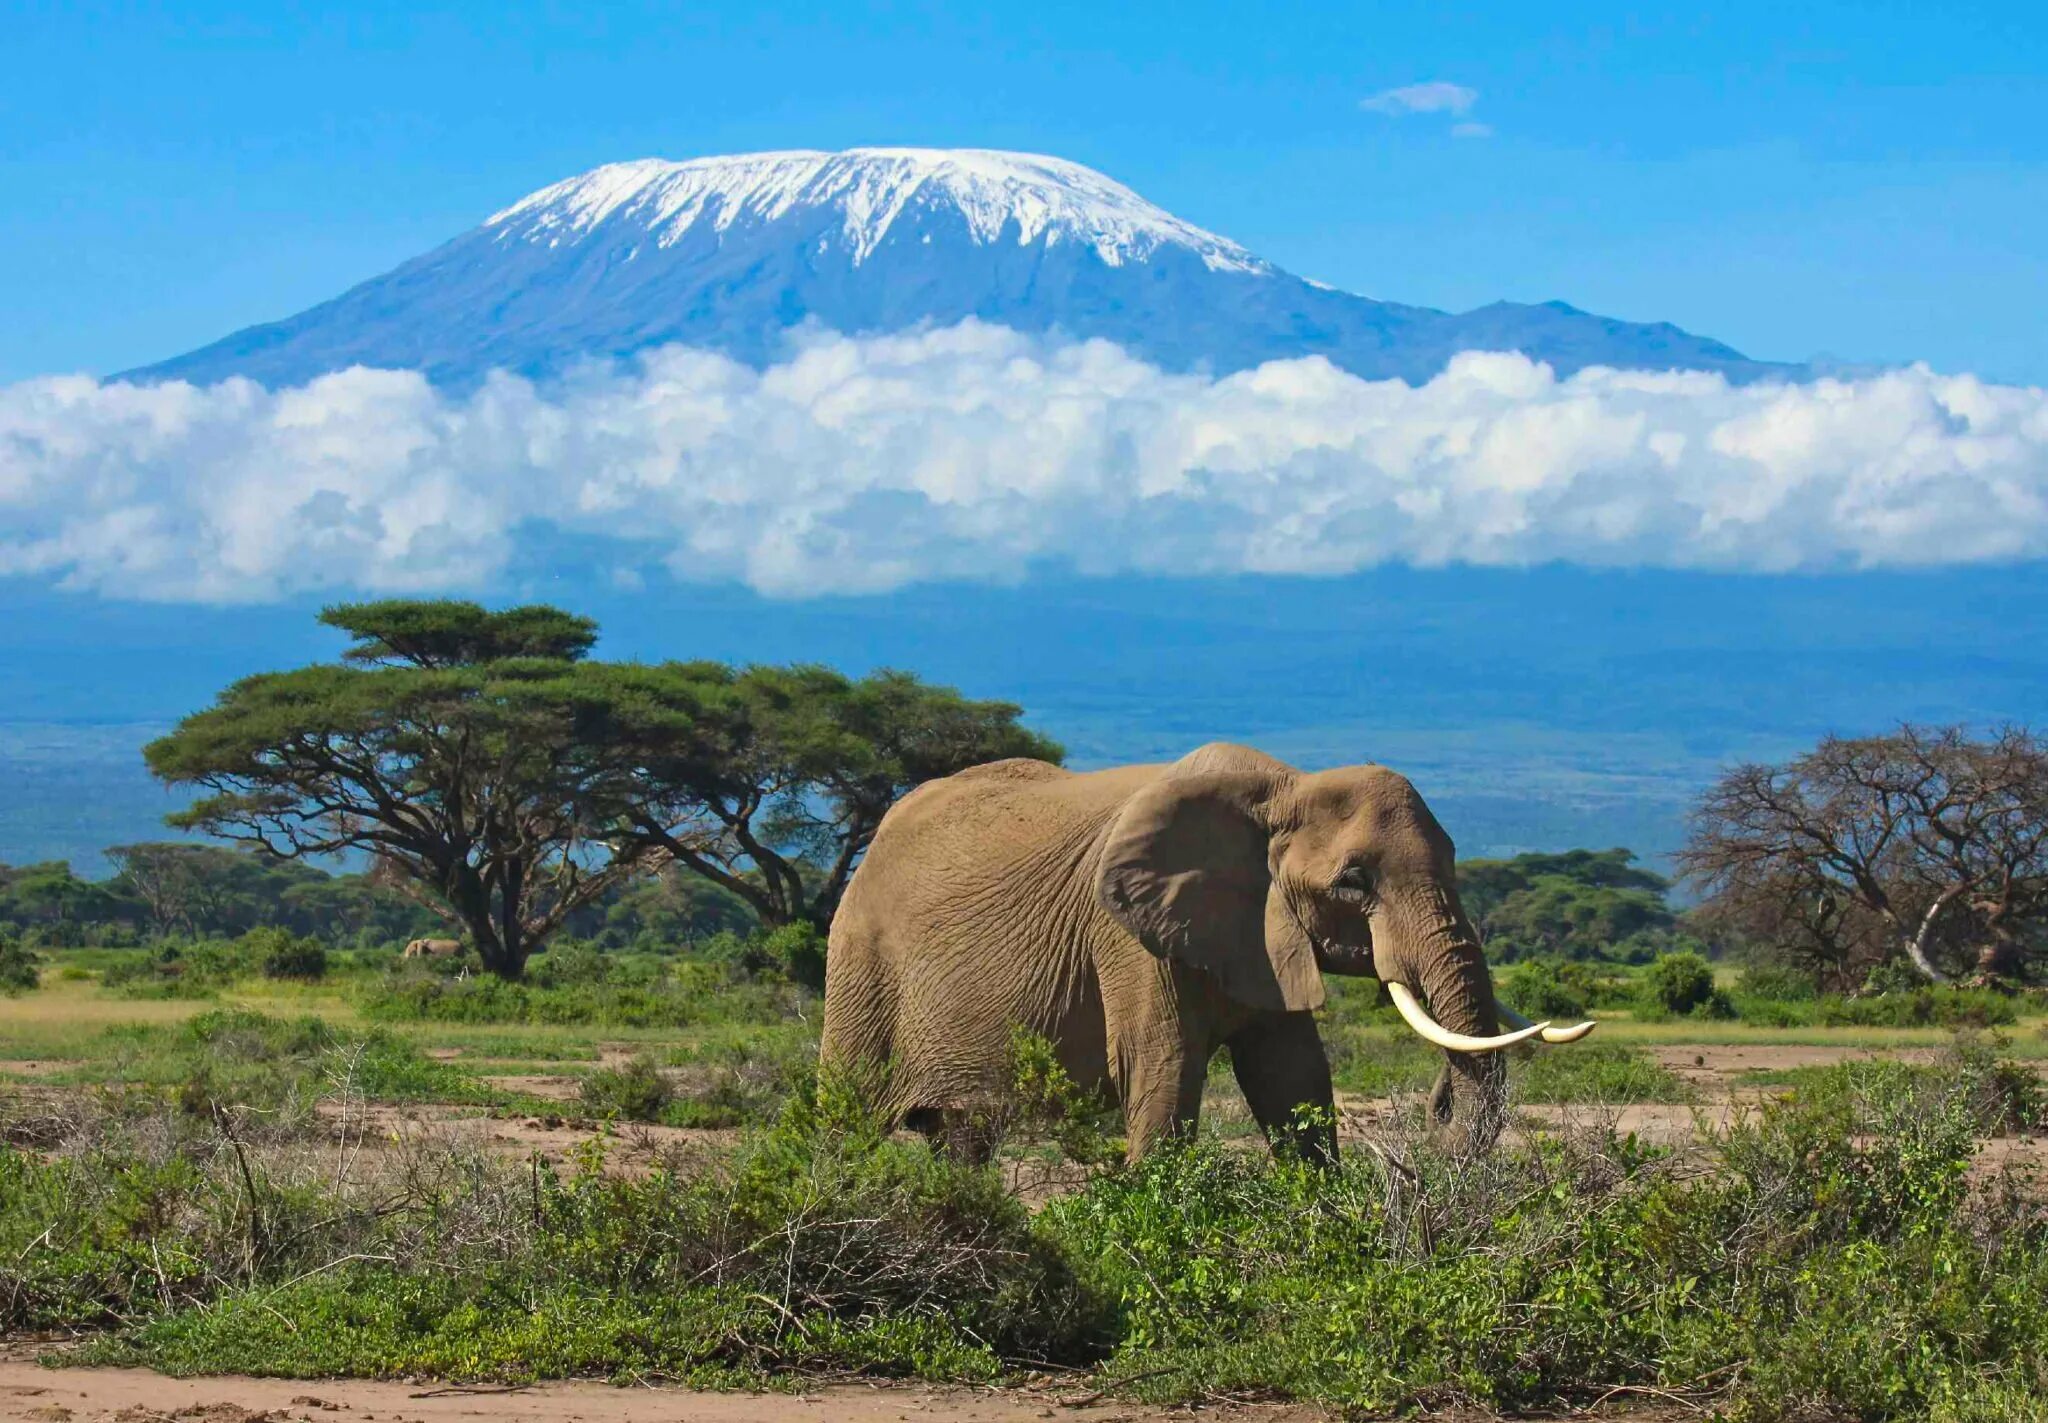 Красивая страна африки. Танзания сафари Килиманджаро. Национальный парк Амбосели Кения. Национальный парк Килиманджаро в Африке. Килиманджаро национальный парк Серенгети.